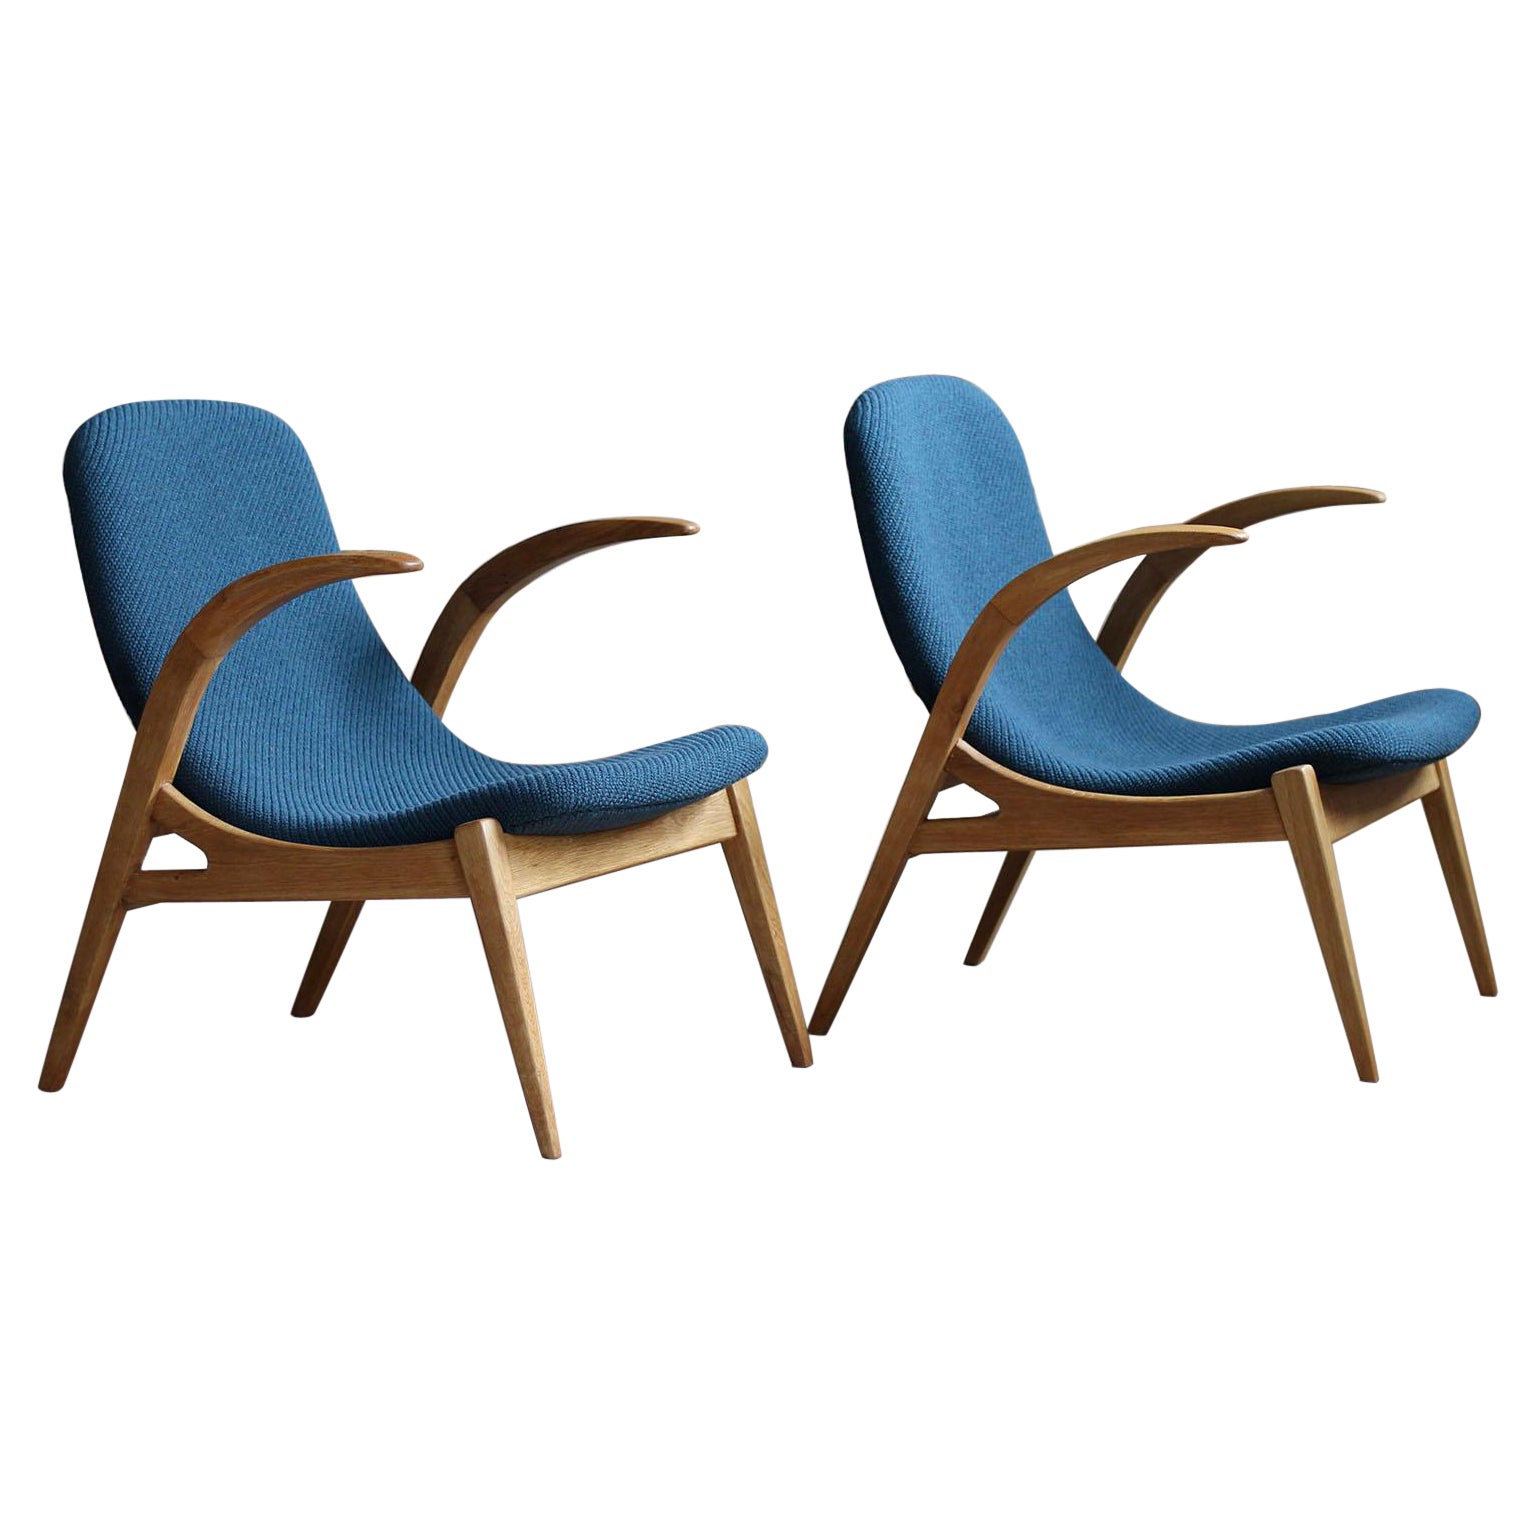 Set of 2 Midcentury Lounge Chairs, 1960s, Czech Republic